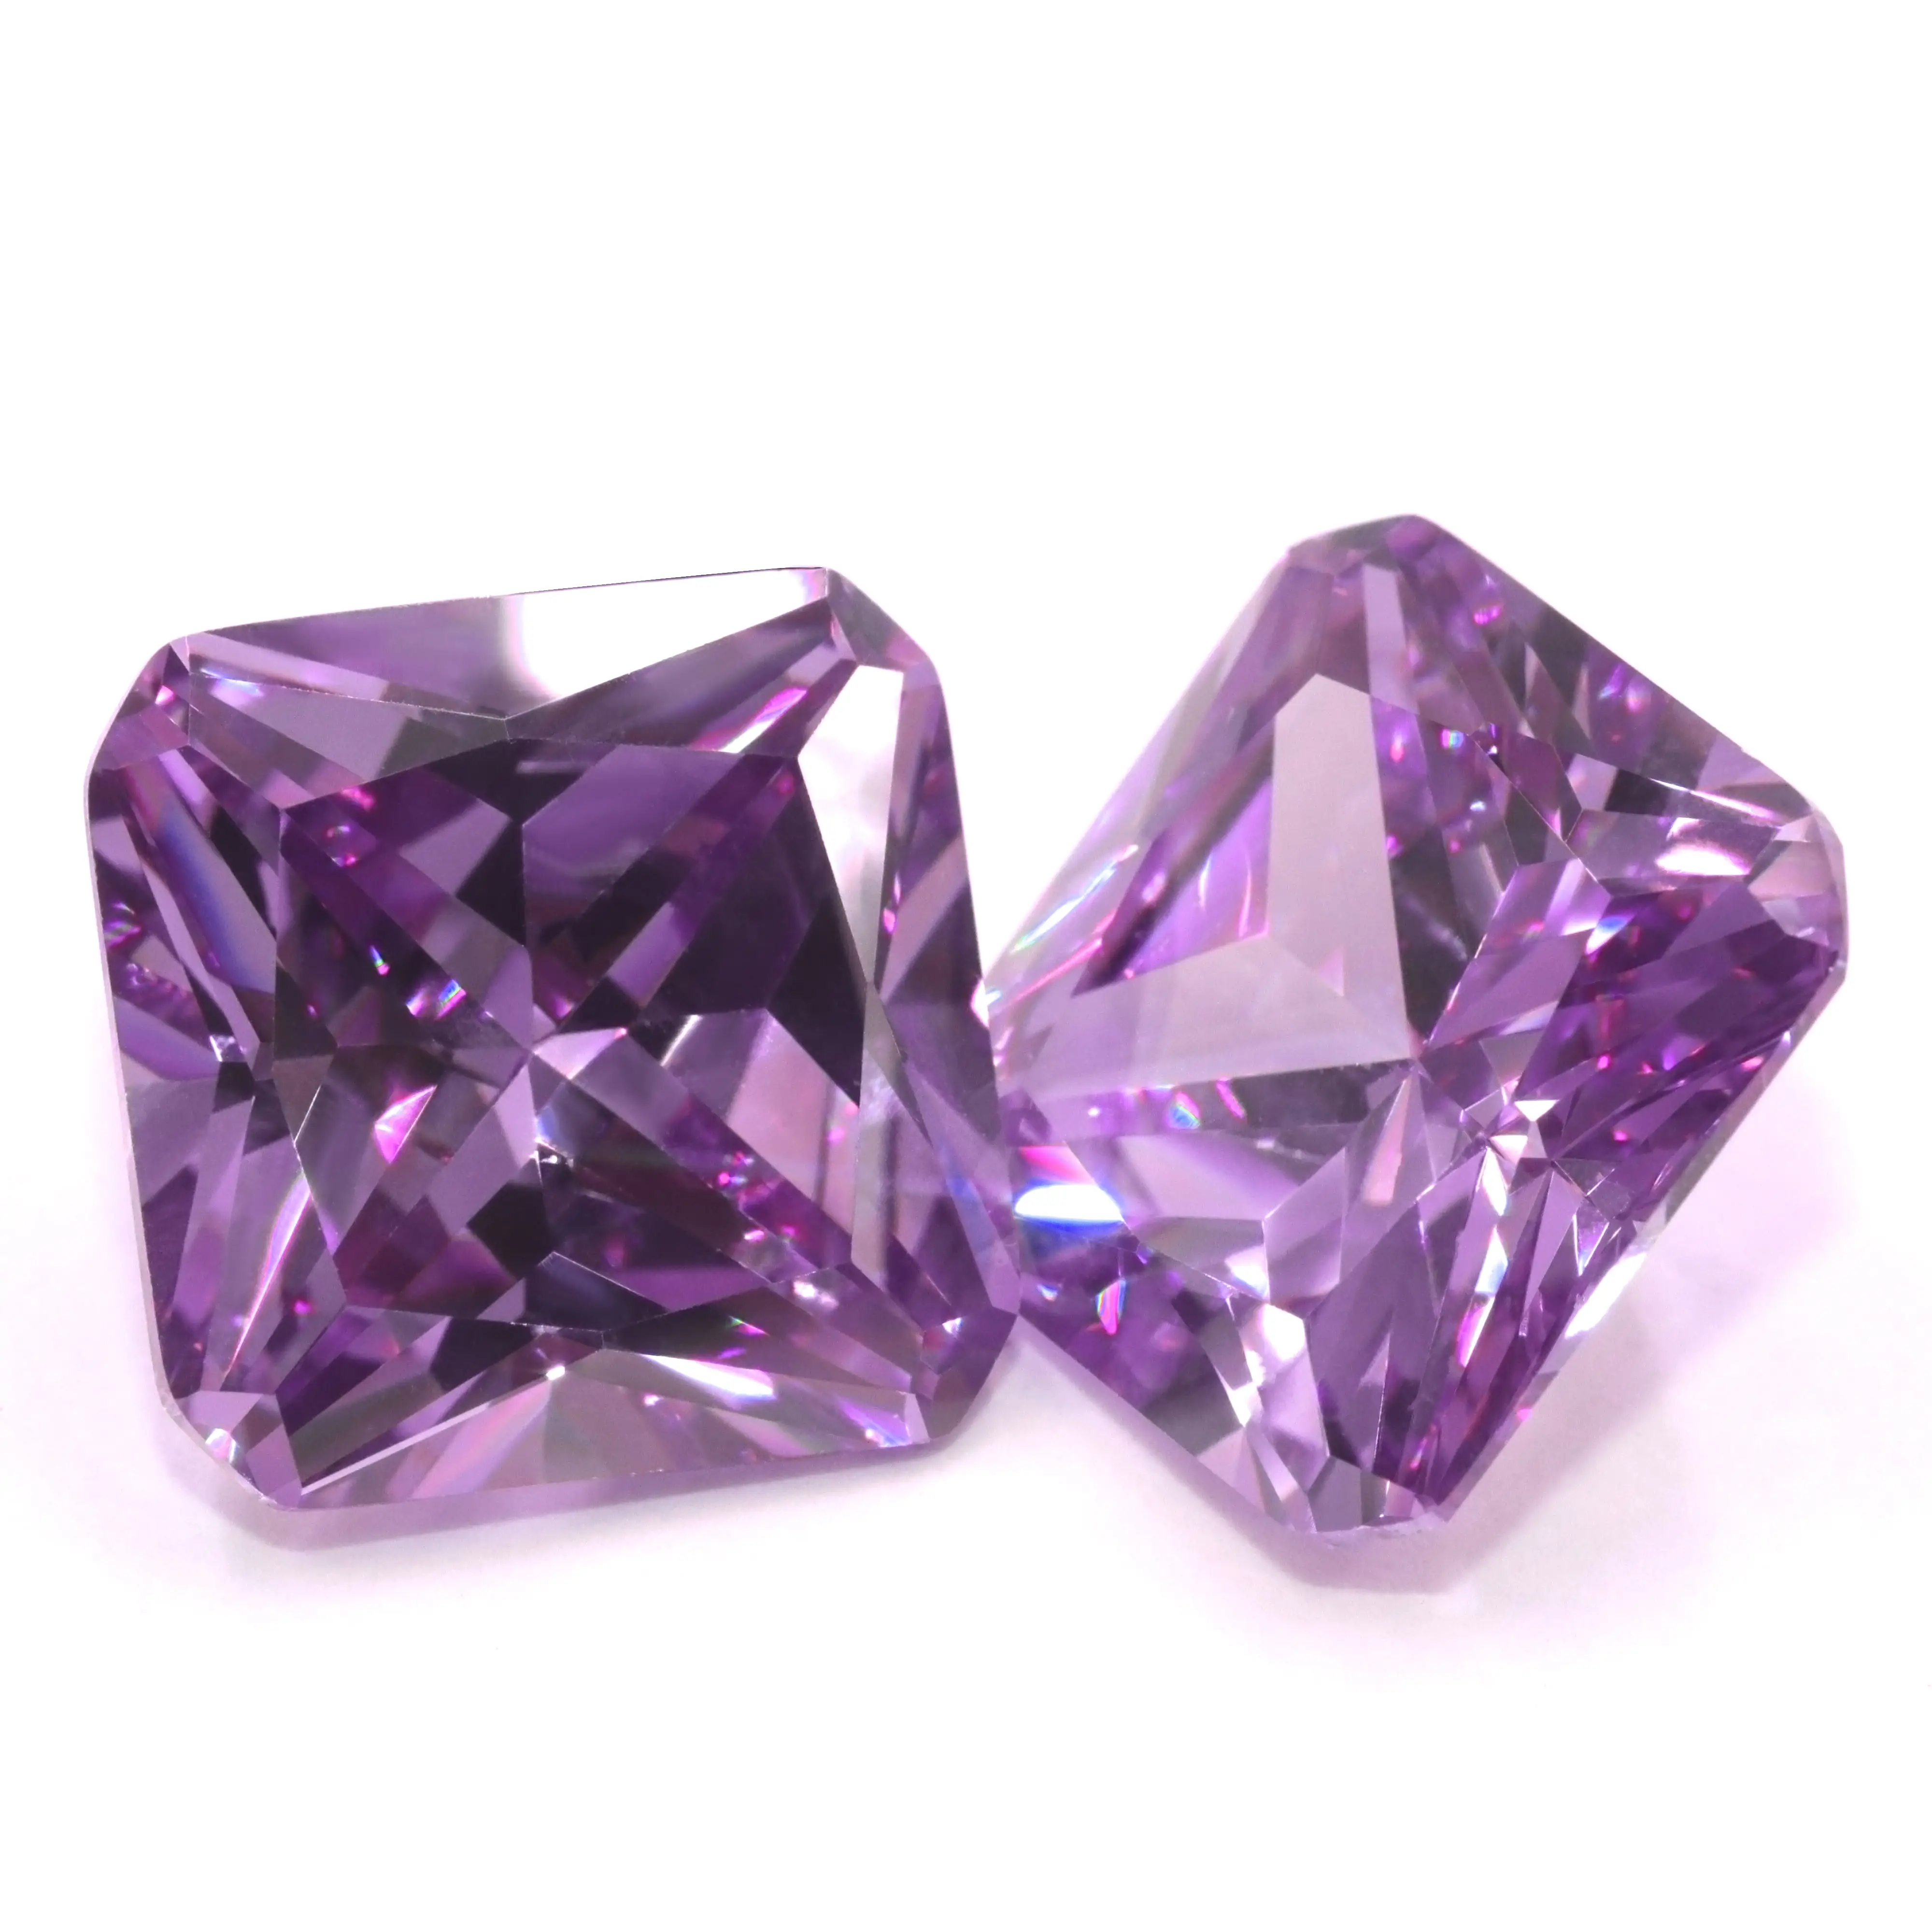 Redleaf Hot Sale Purple Lavender Color Cubic Zirconia Square Octagon Cut CZ Stone For Fashion Jewelry